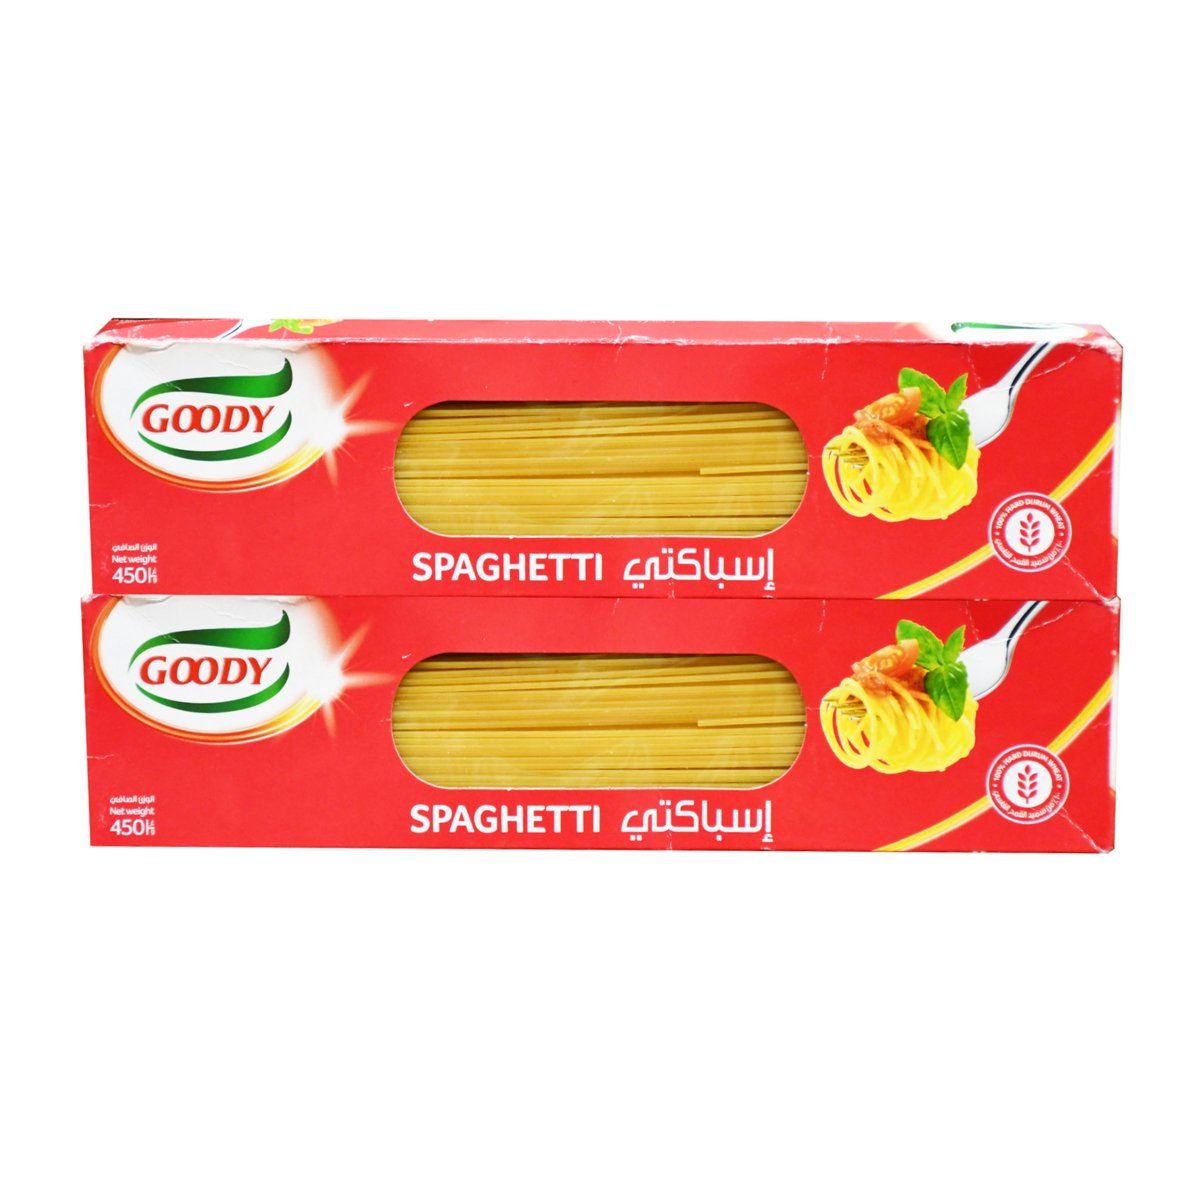 Goody Spaghetti 2 x 450g